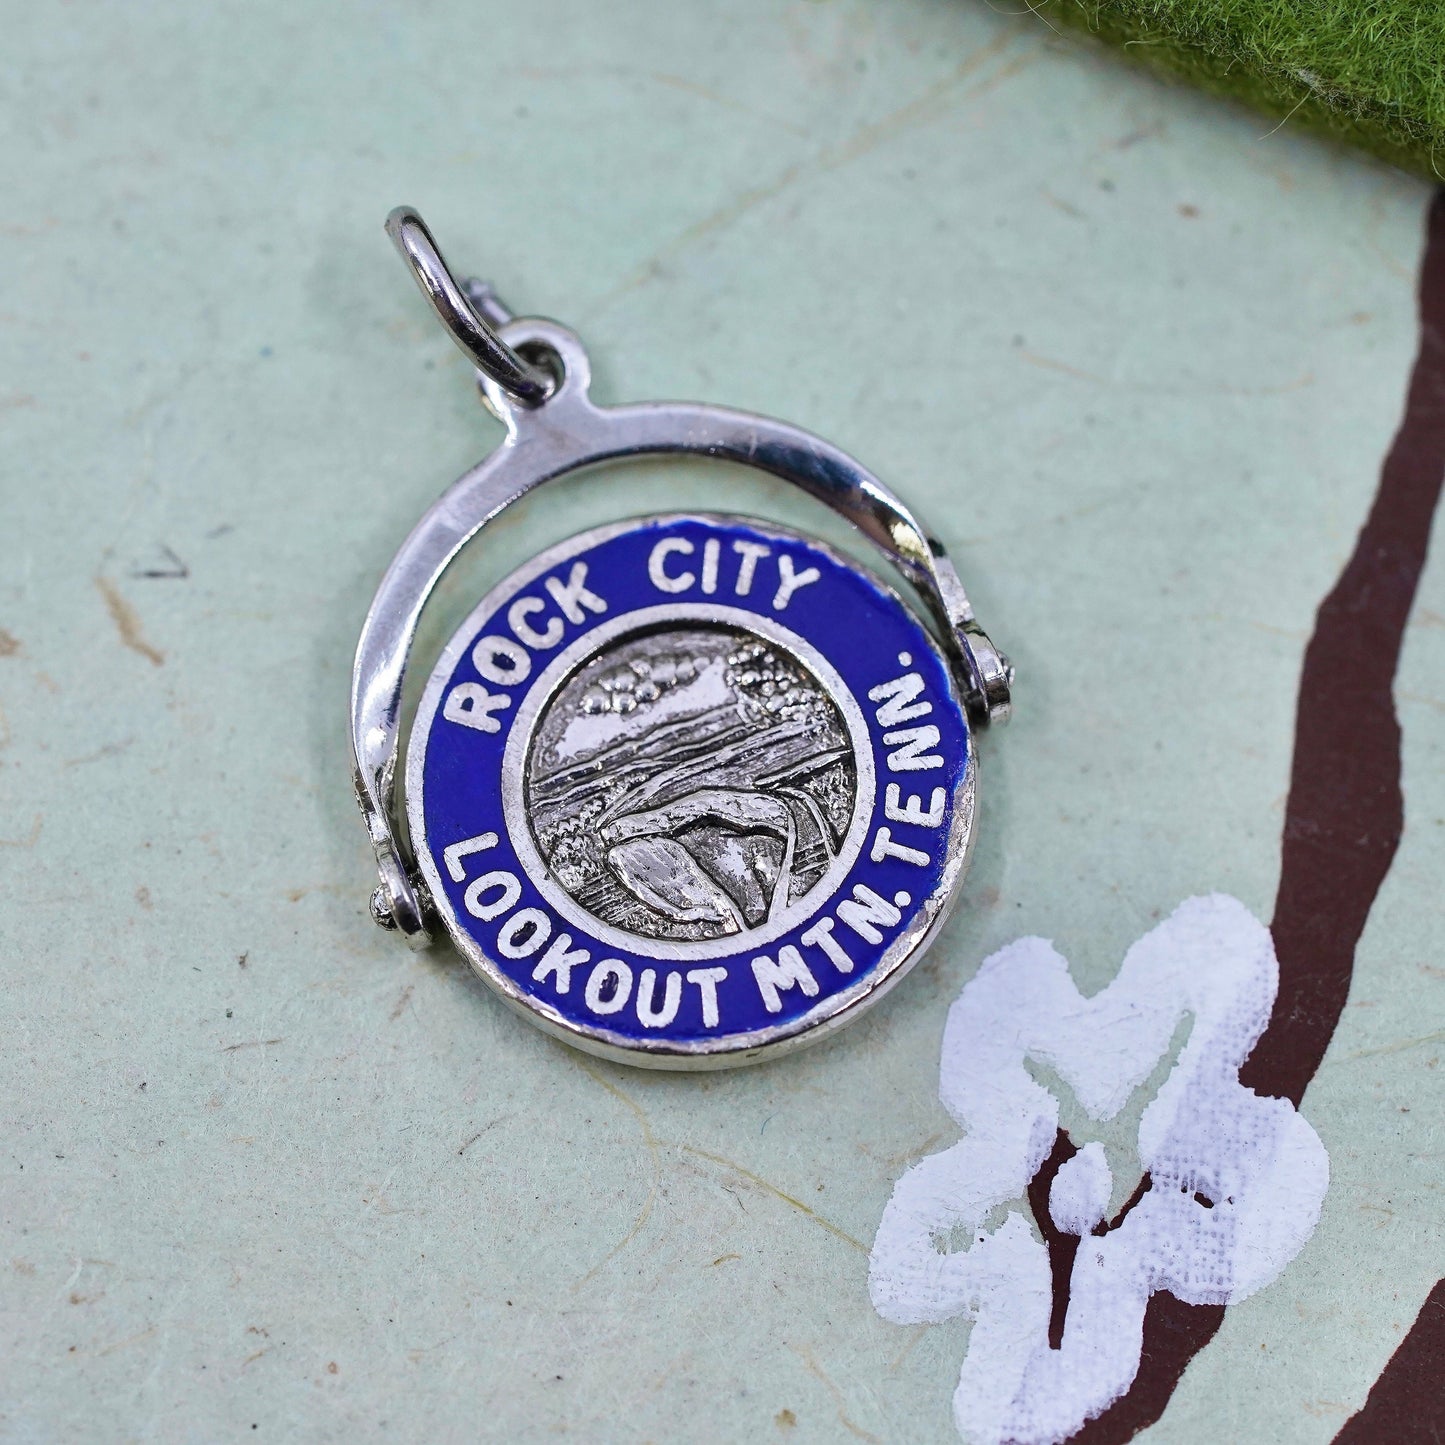 sterling silver pendant, 925 enamel tag charm “Rock City lookout Mtn. Tenn.”